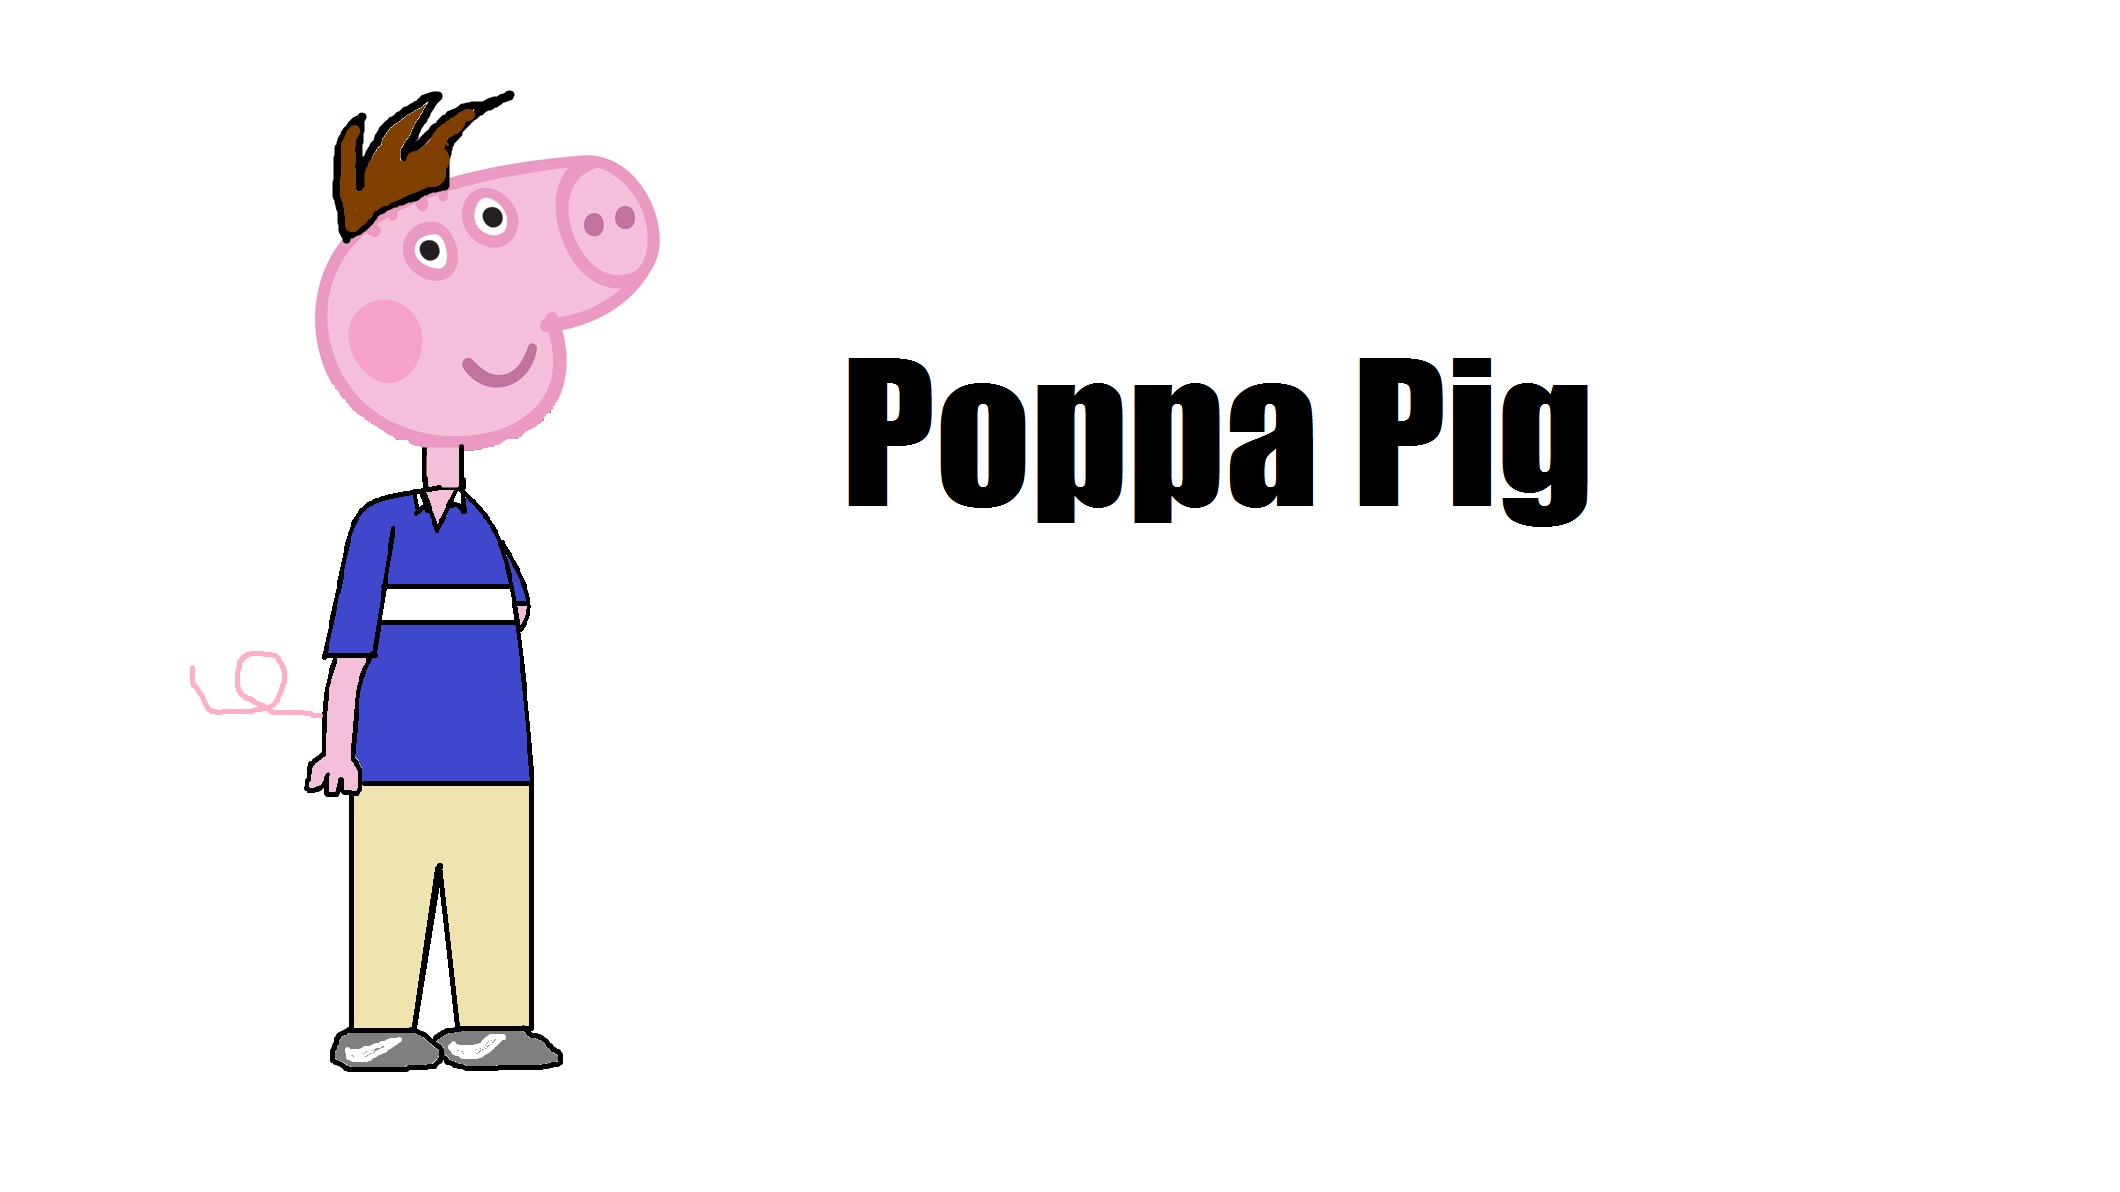 Five Nights At Peppa's, Peppa Pig Fanon Wiki